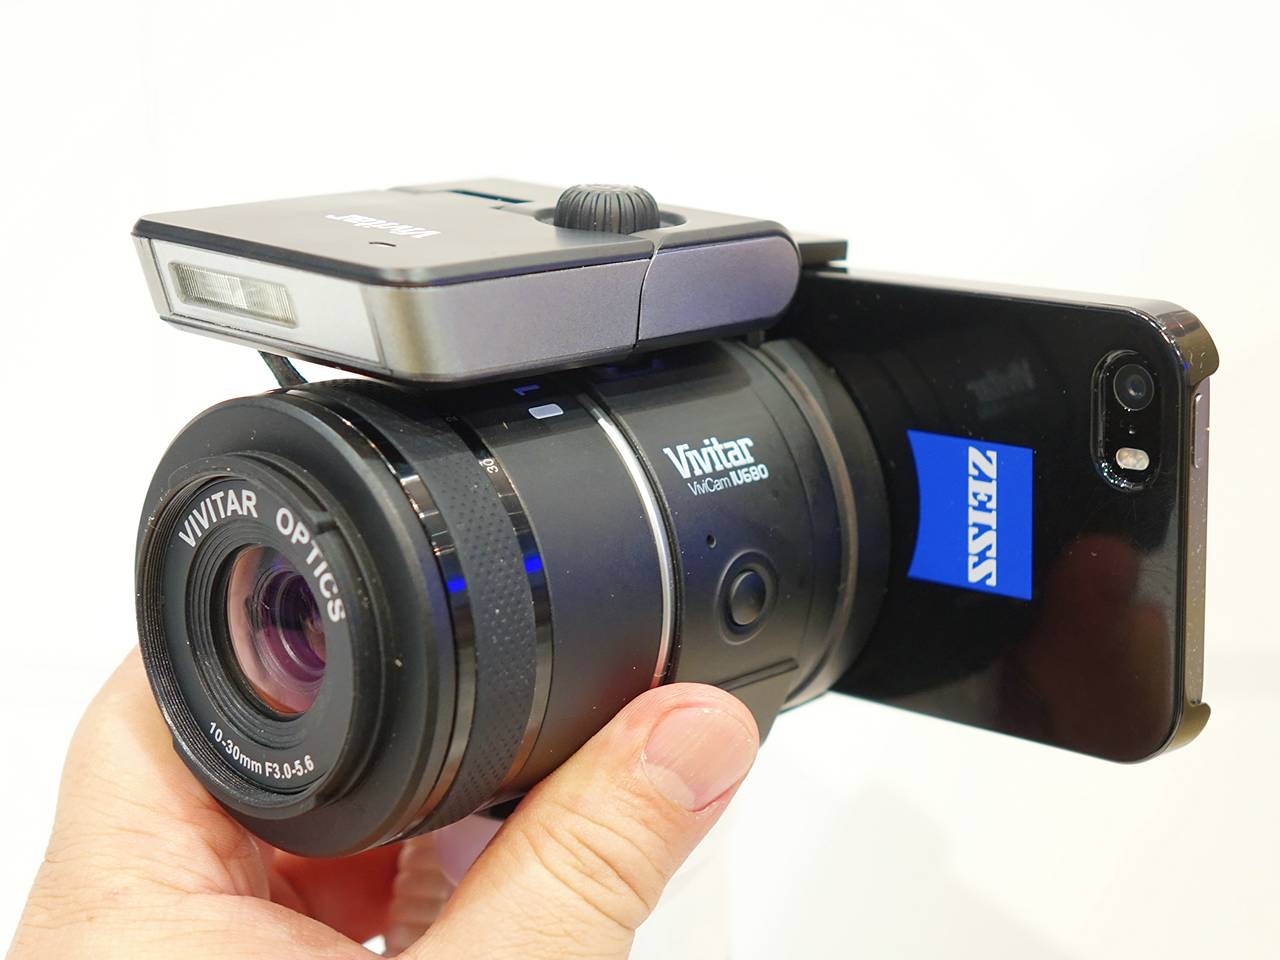 Samsung digital camera drivers download